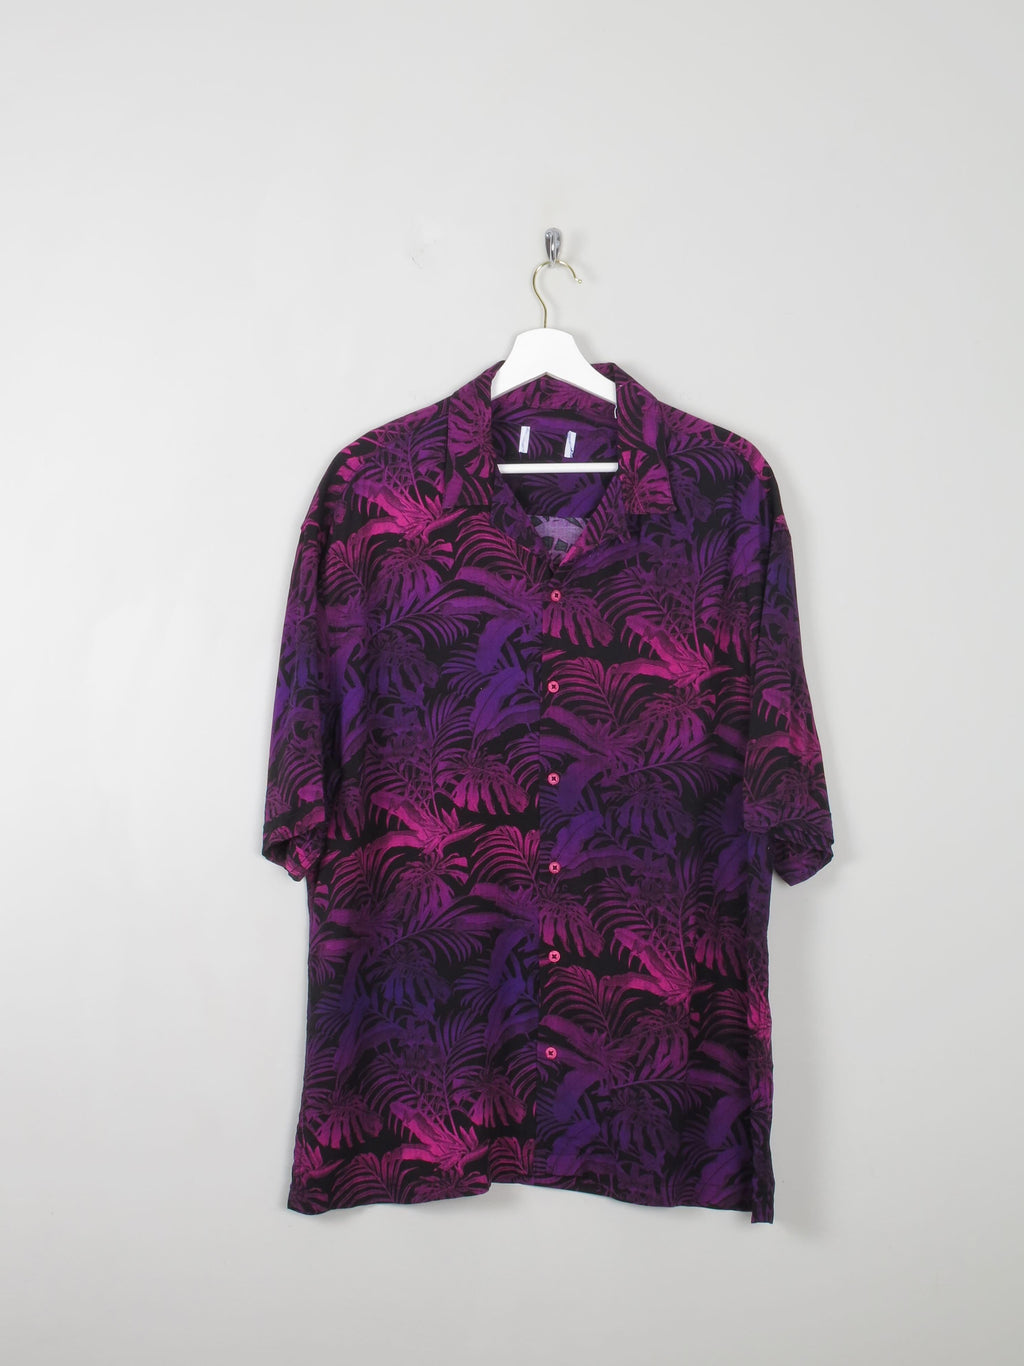 Men's Purple Hawaiian Shirt L - The Harlequin